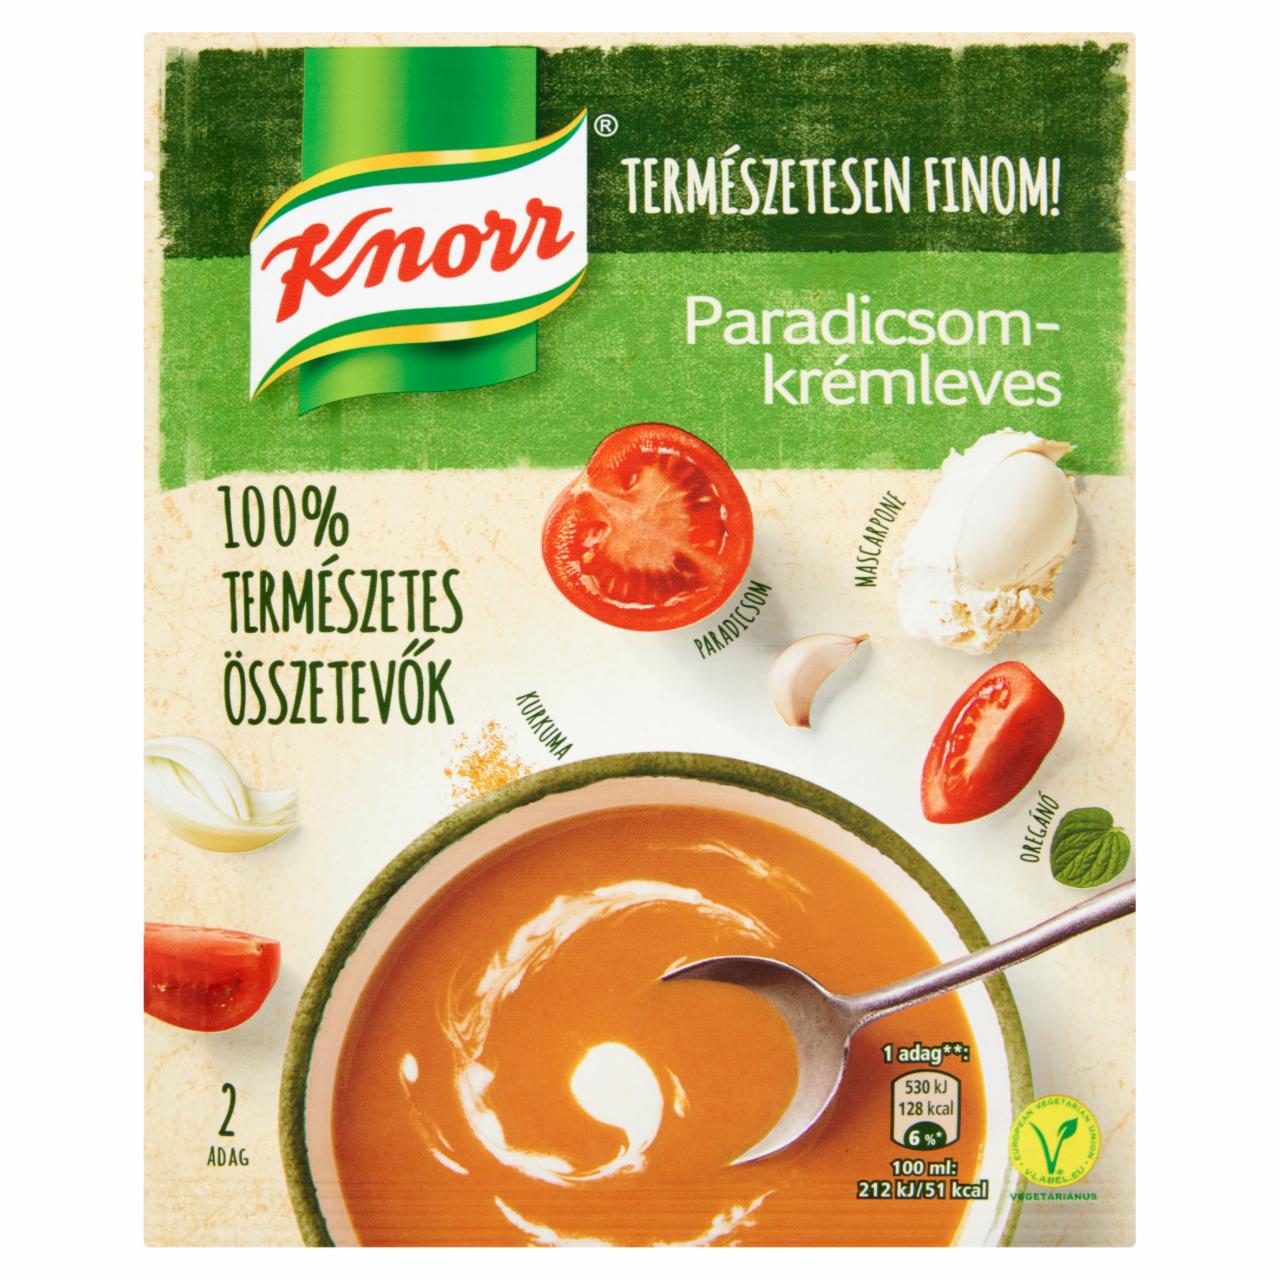 Képek - Knorr paradicsom-krémleves 70 g